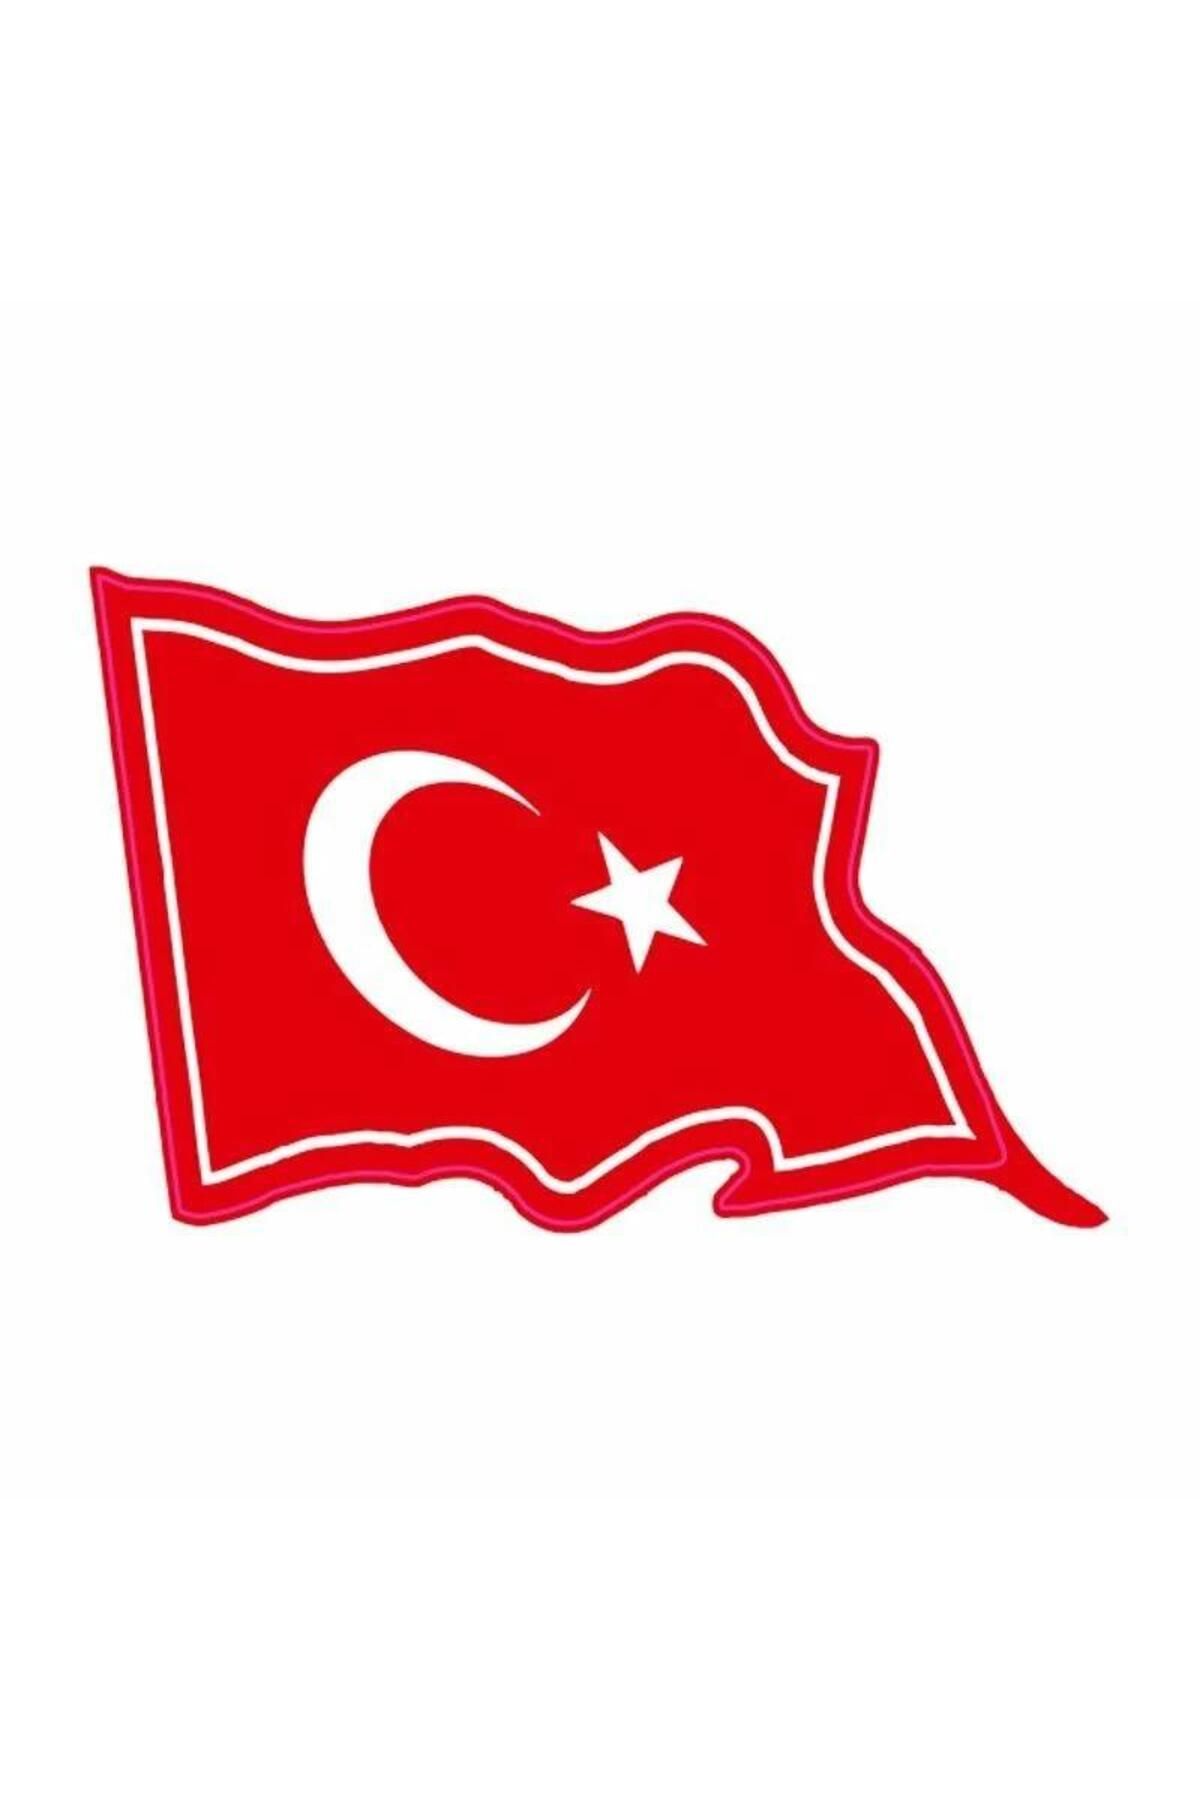 Gogo Türk Bayrağı Desenli Sticker 100 x 65 mm